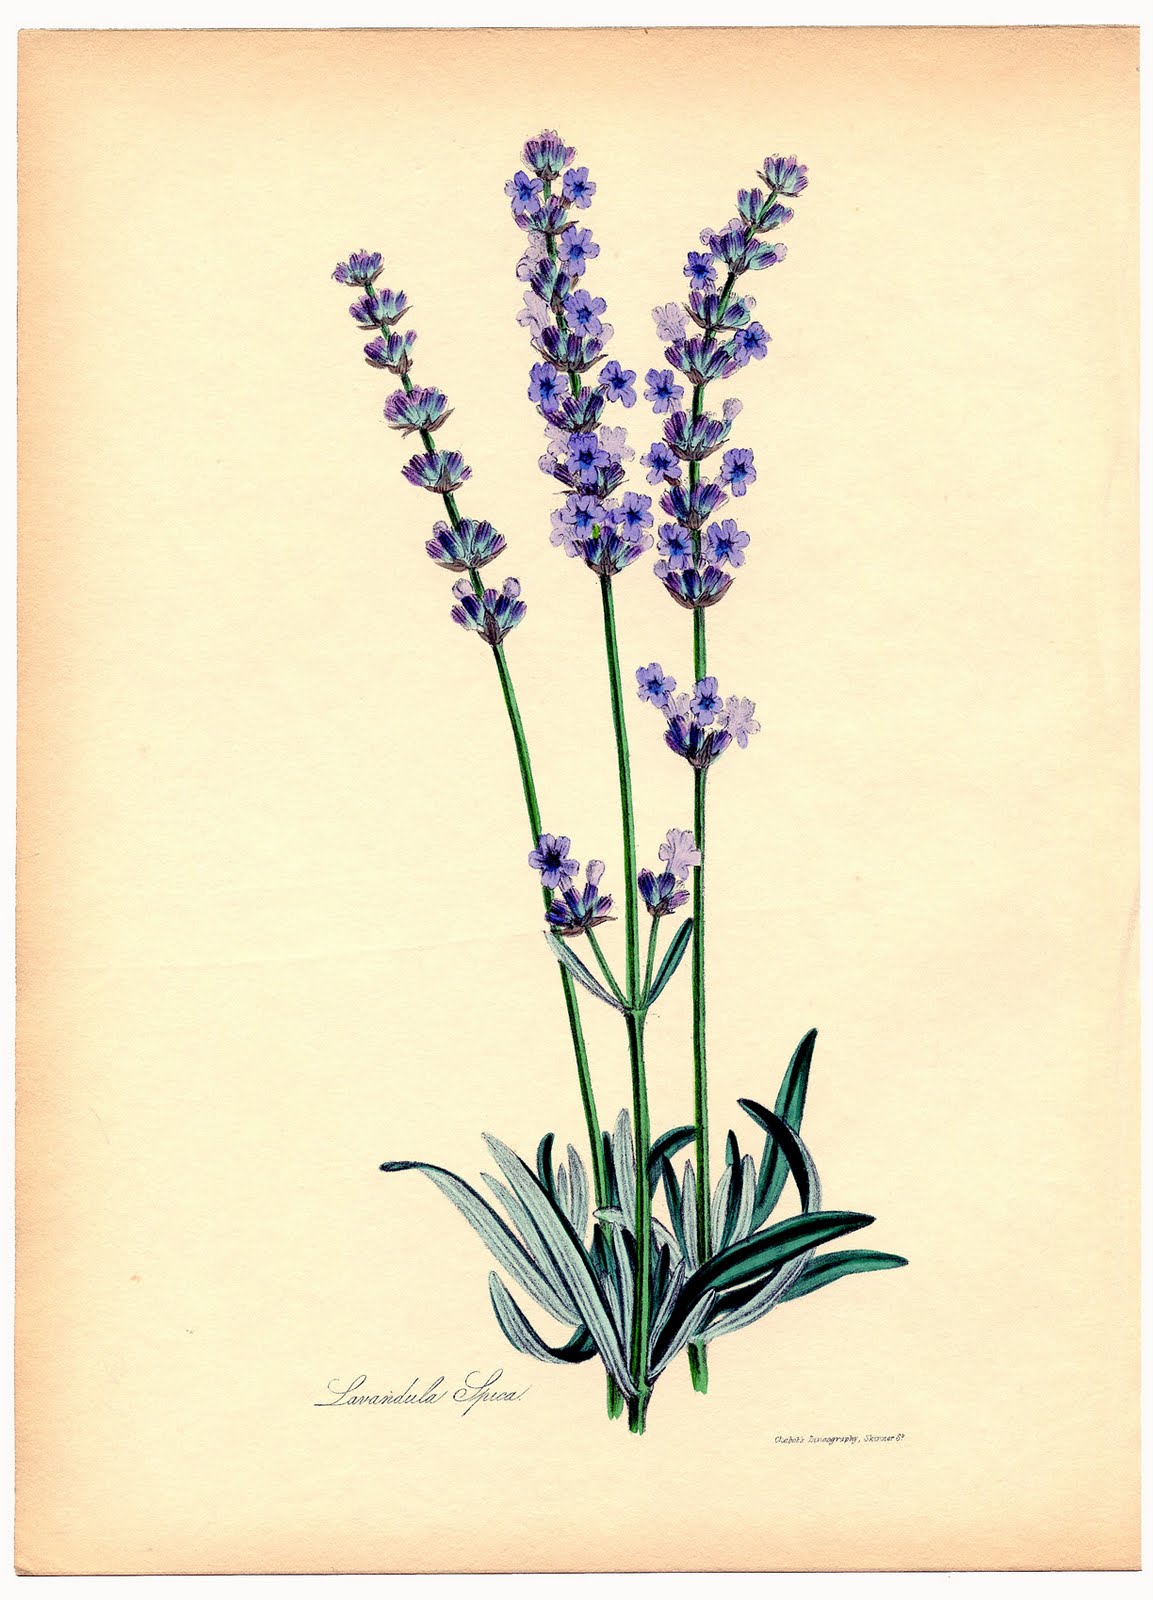 Instant Art Printable   Superb Lavender Botanical   The Graphics Fairy